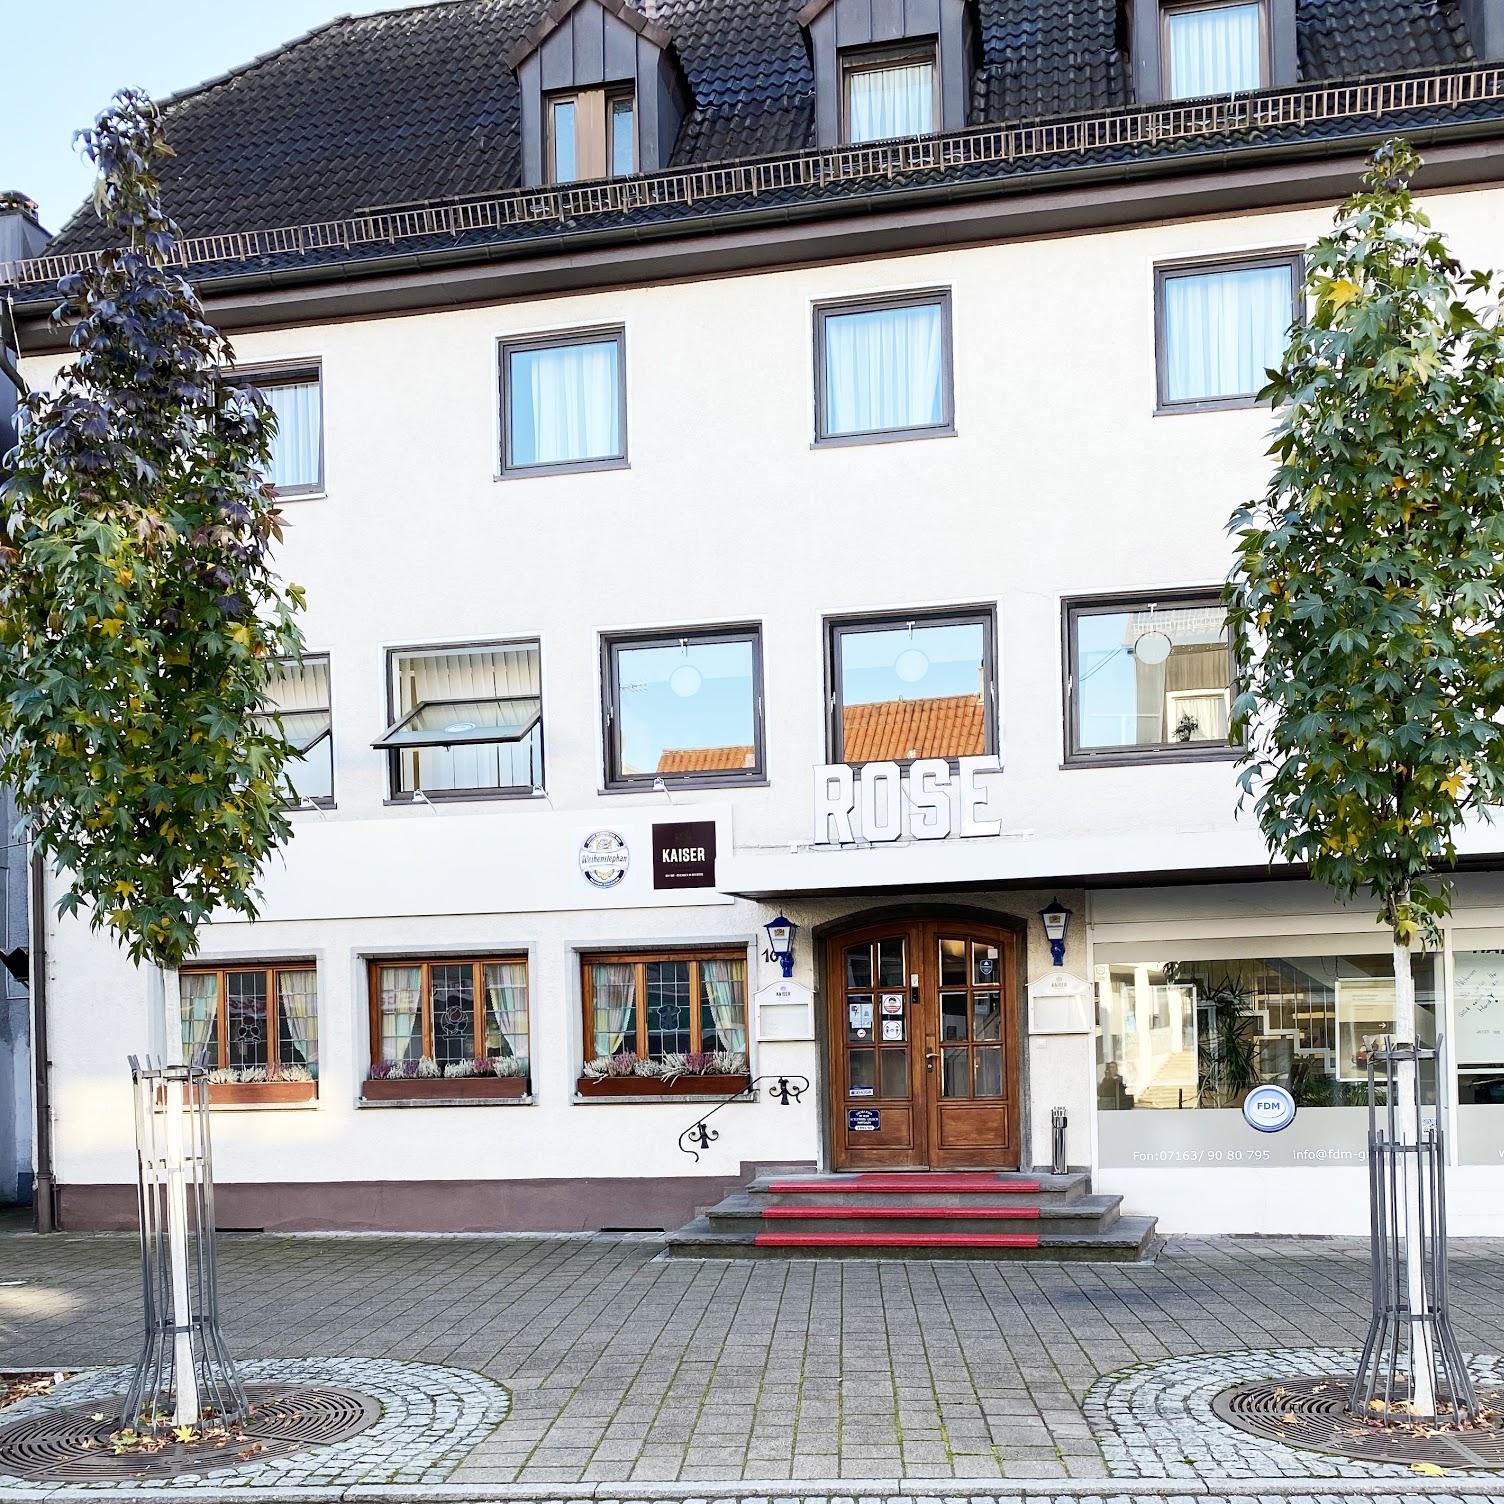 Restaurant "Hotel Goldene Rose" in Ebersbach an der Fils